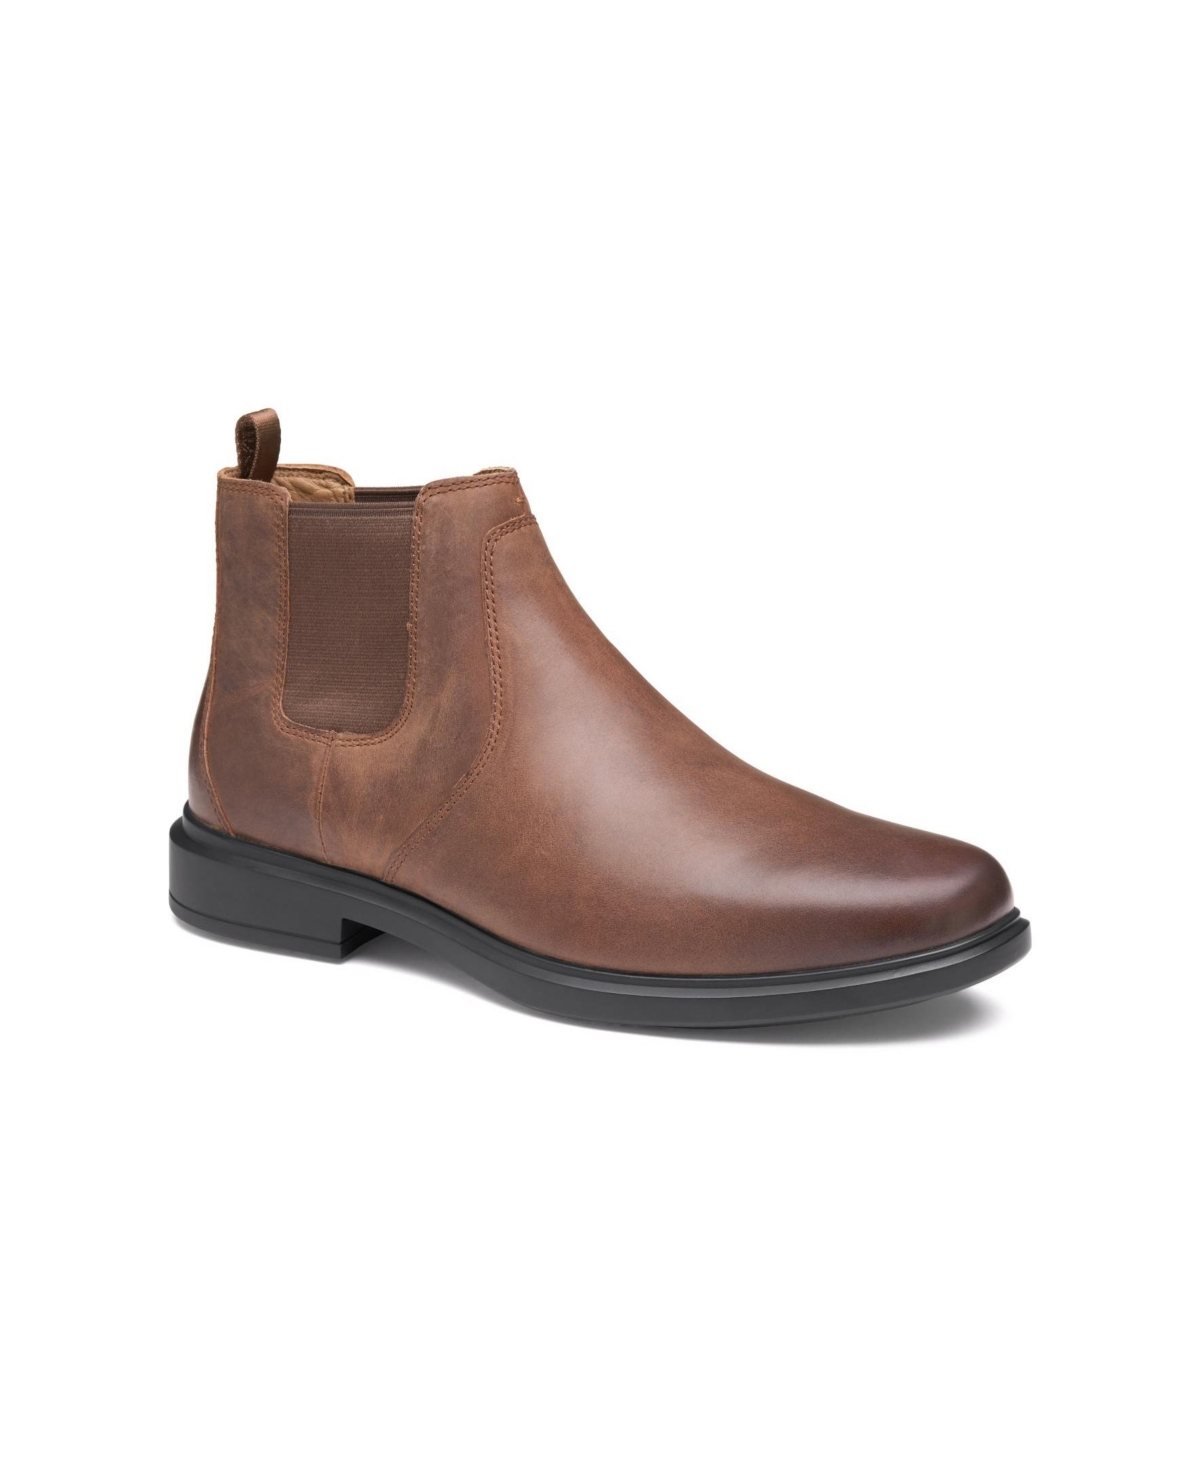 Men's XC4 Stanton 2.0 Waterproof Leather Chelsea Boots - Tan Oiled Full Grain Leather